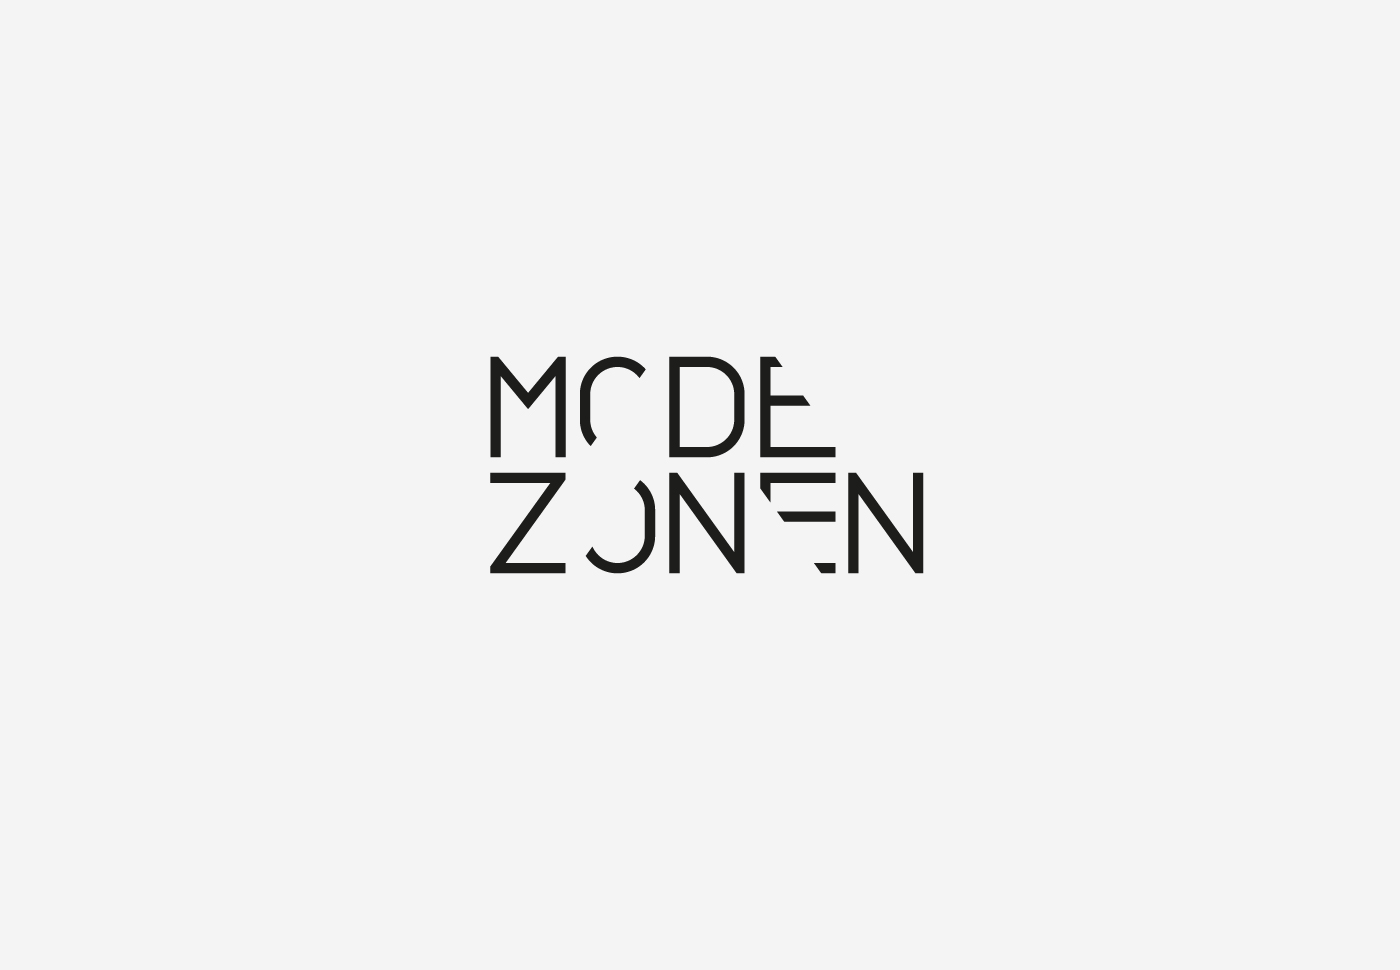 Modezonen – Logo